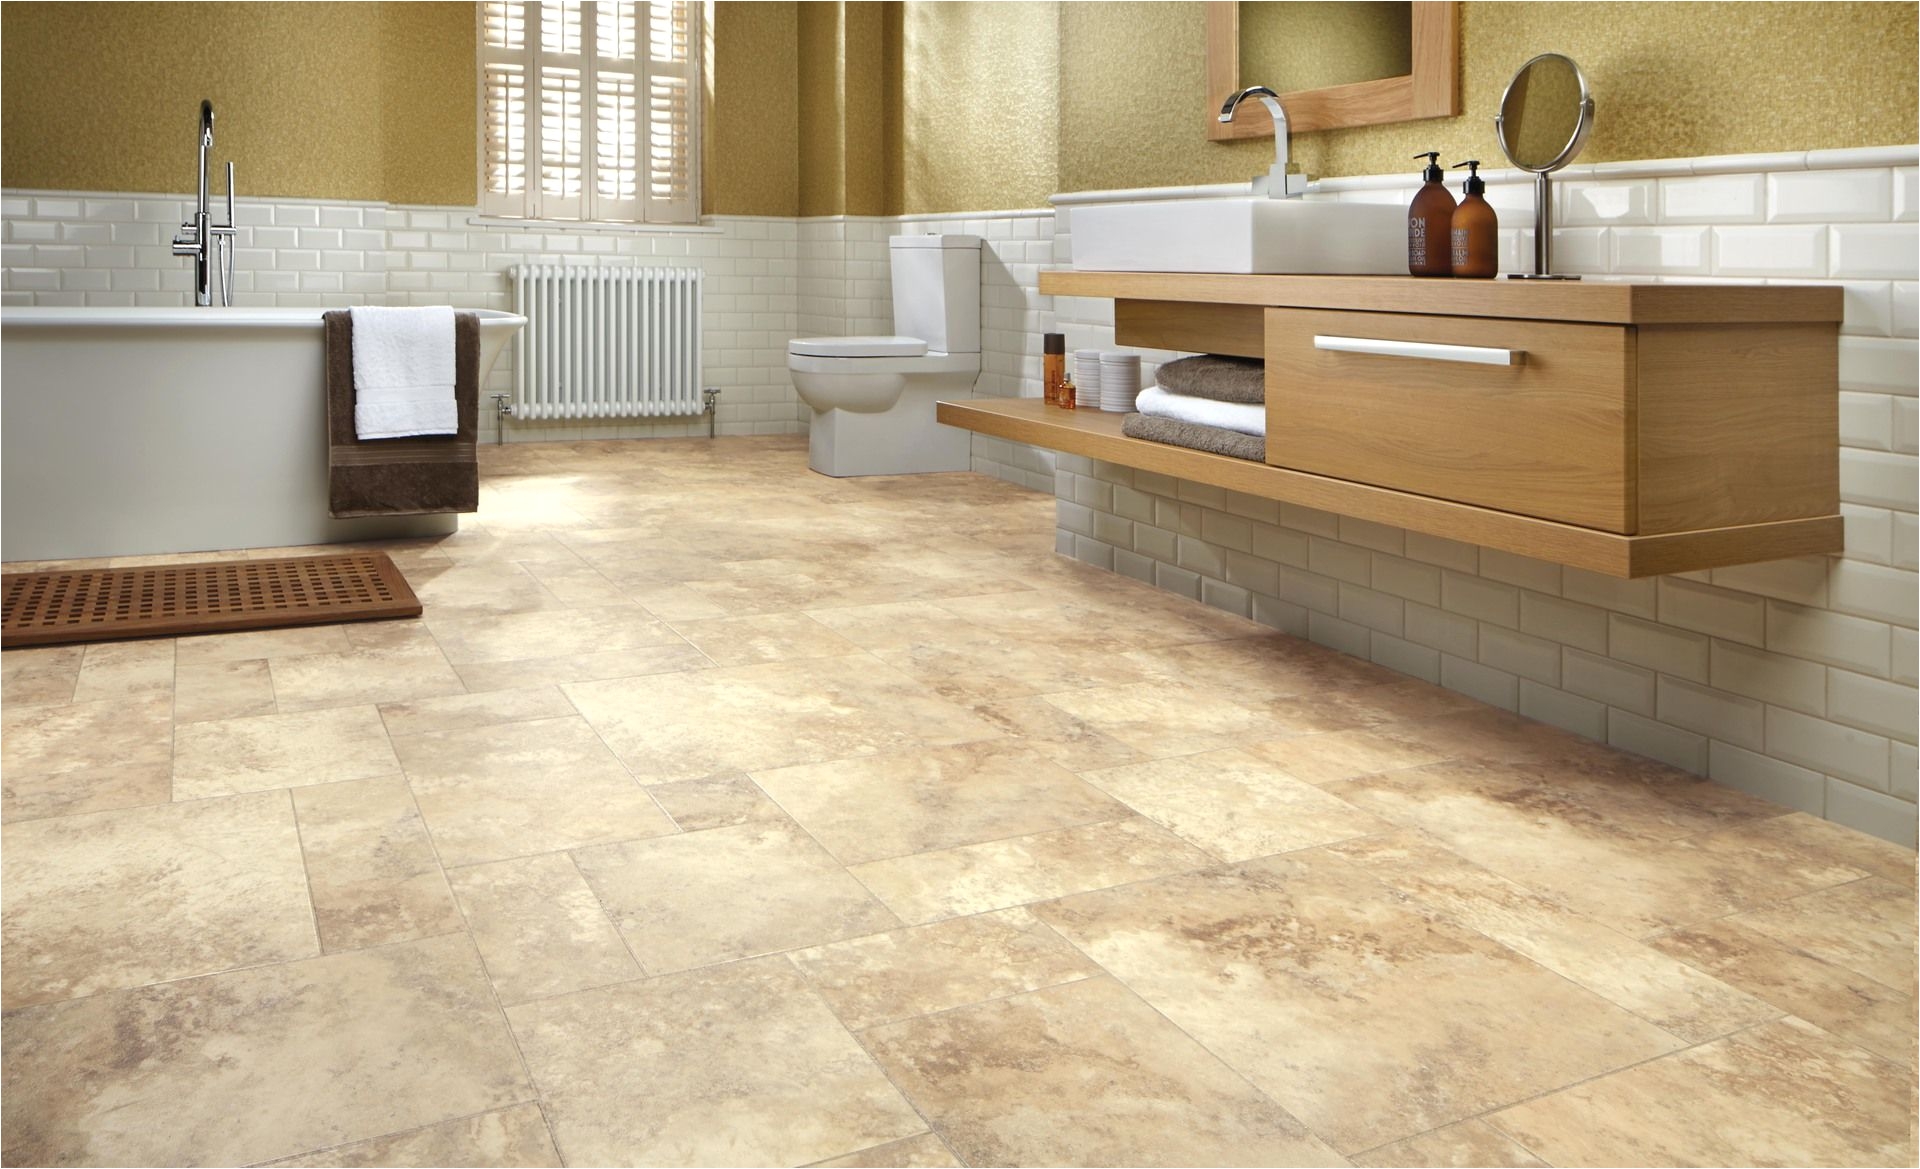 Lowes Grip Strip Flooring Perfect Floating Tile Floor Lowes Best Home Design Inspiration Of